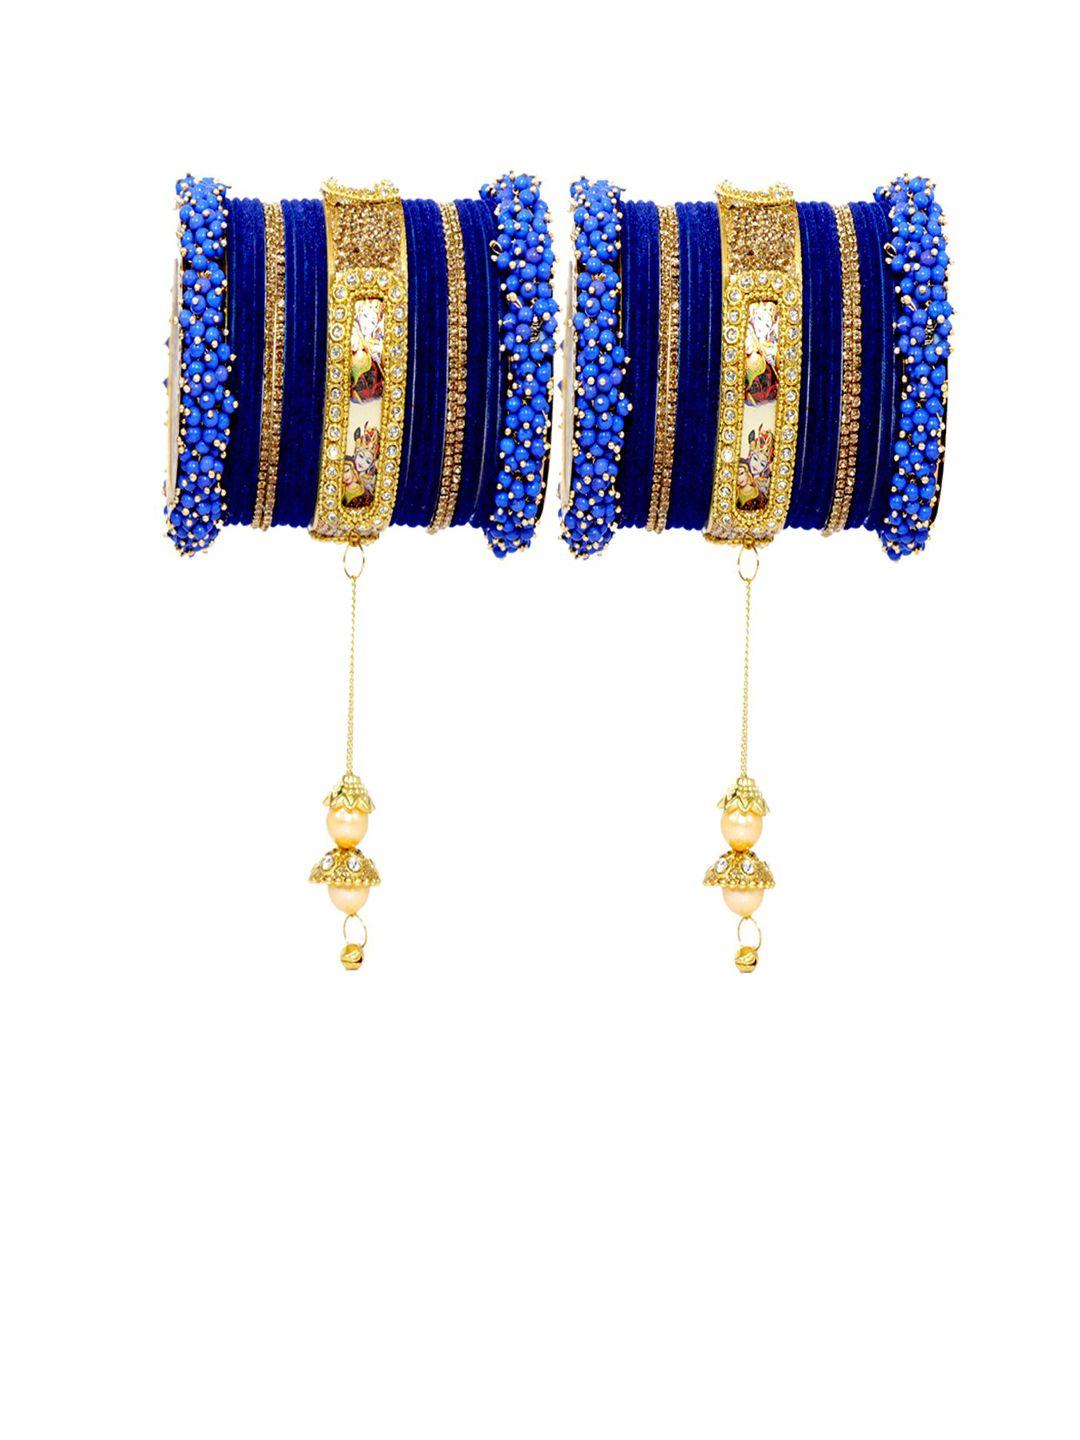 nmii set of 46 stone-studded & pearl detailed bangles set